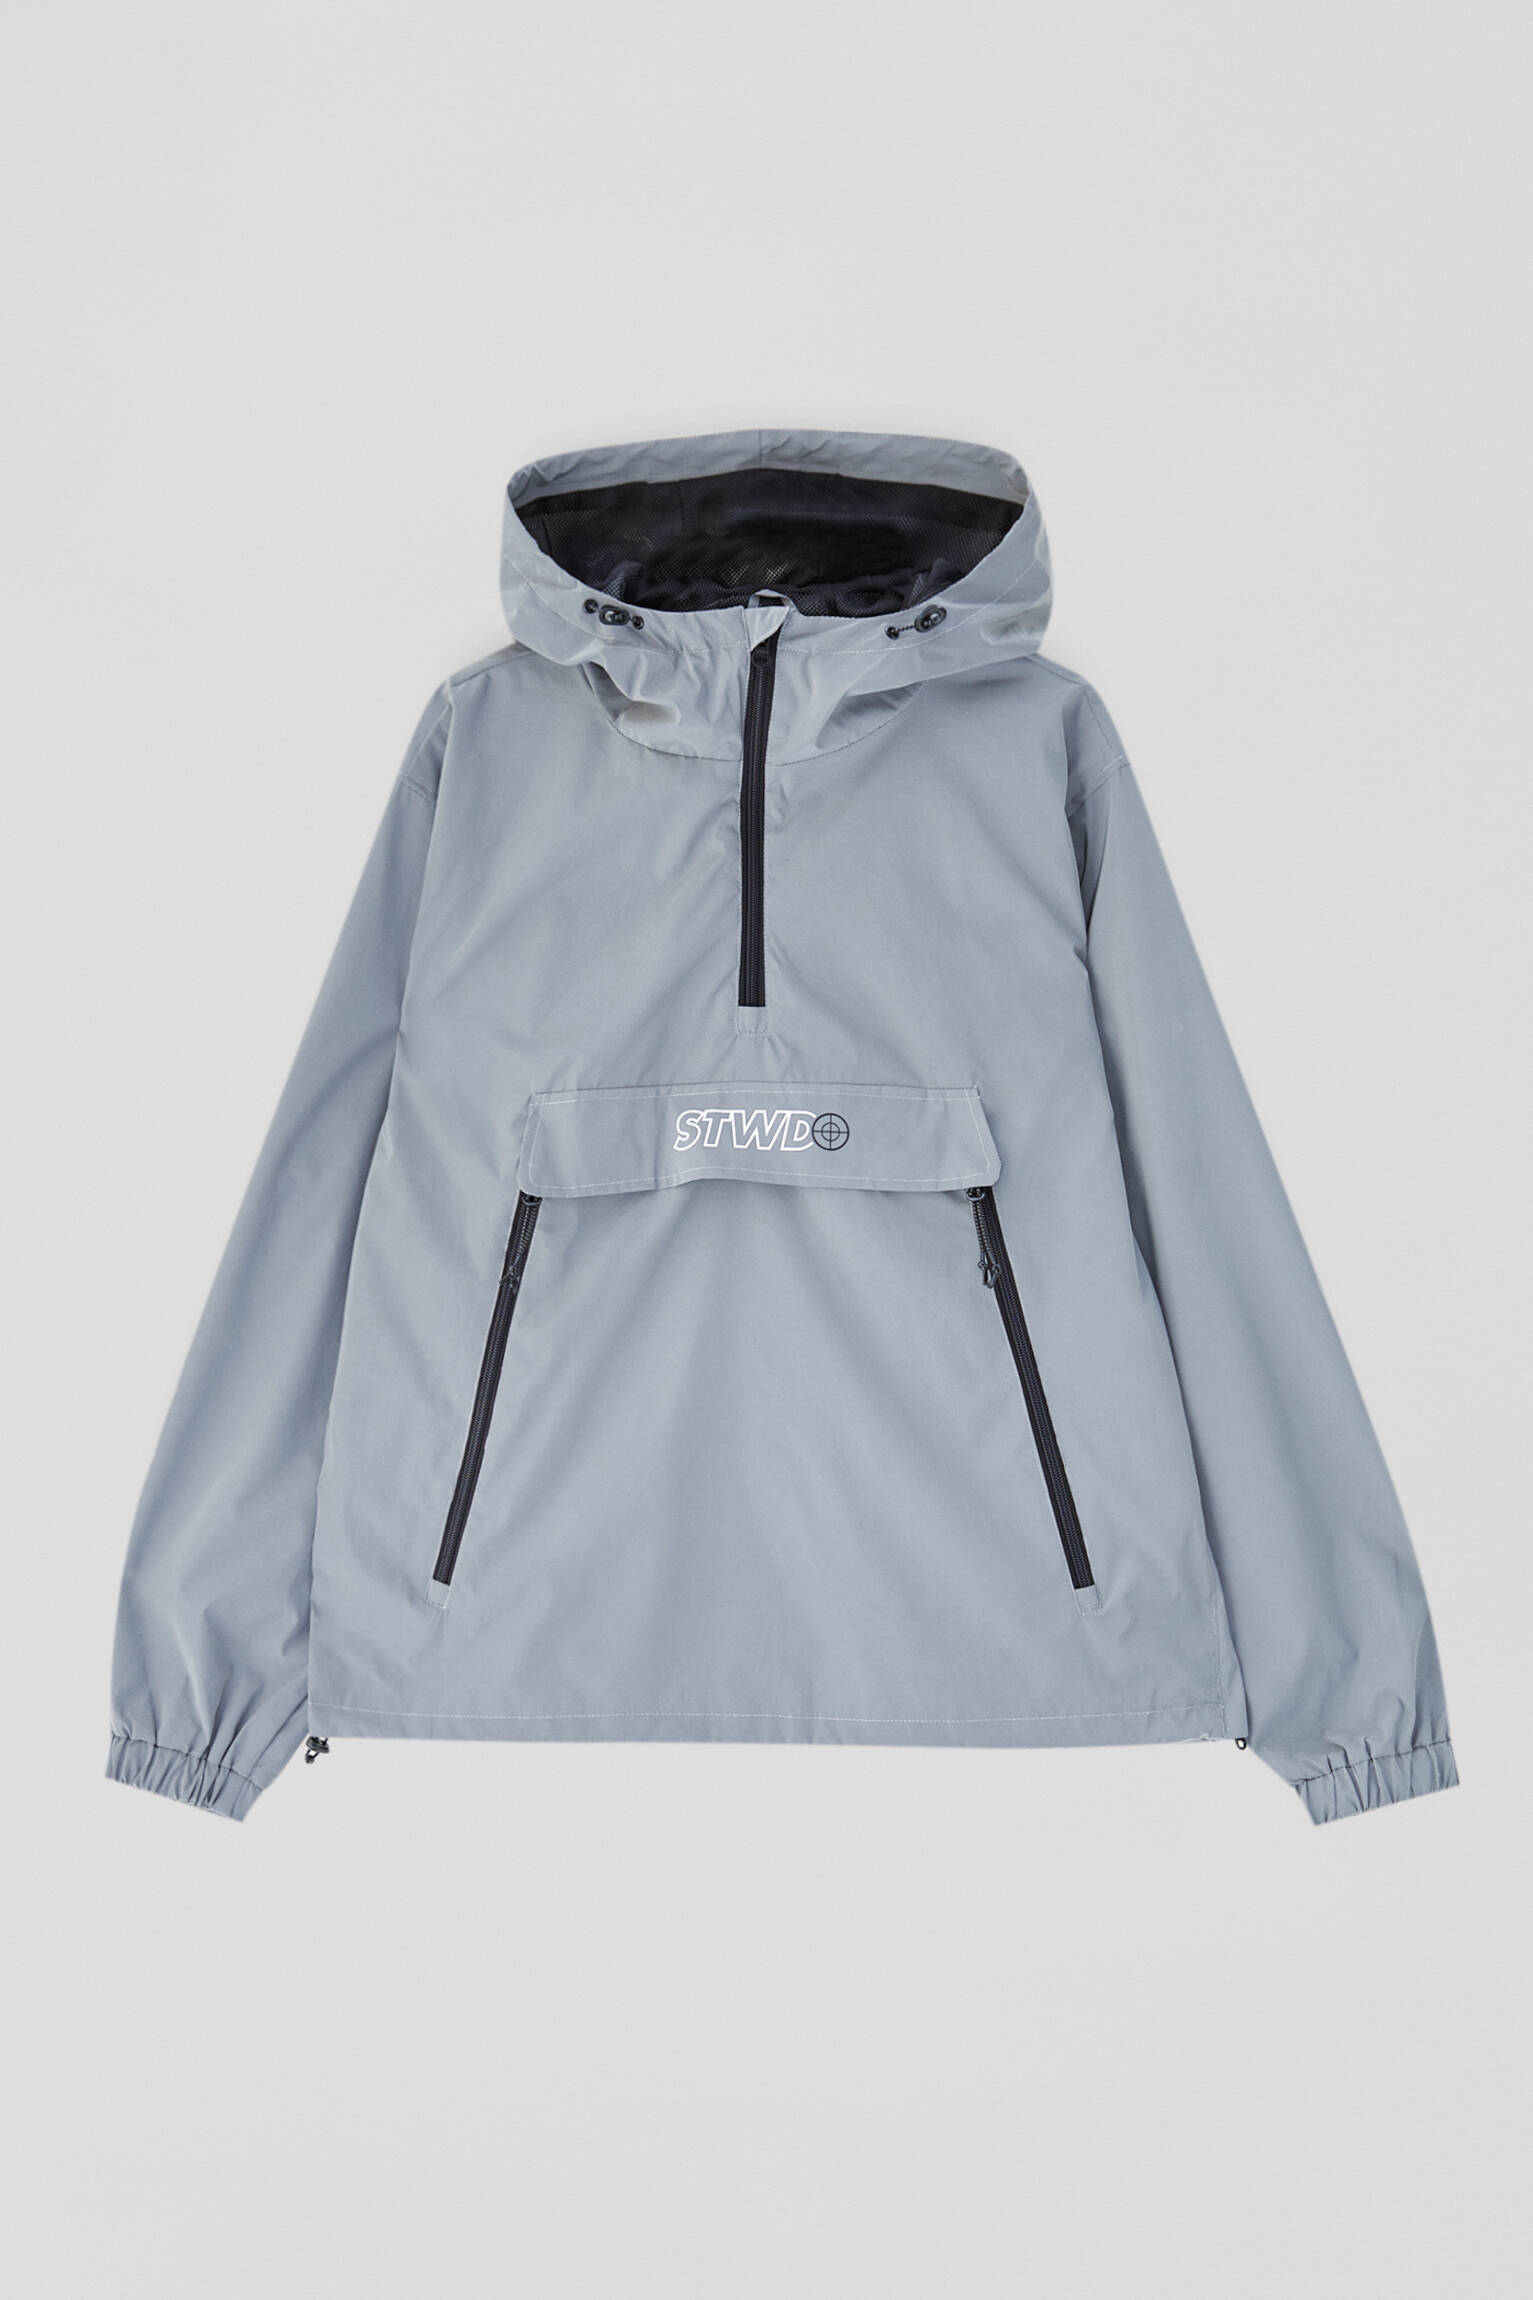 Pull & Bear - Reflective STWD anorak jacket